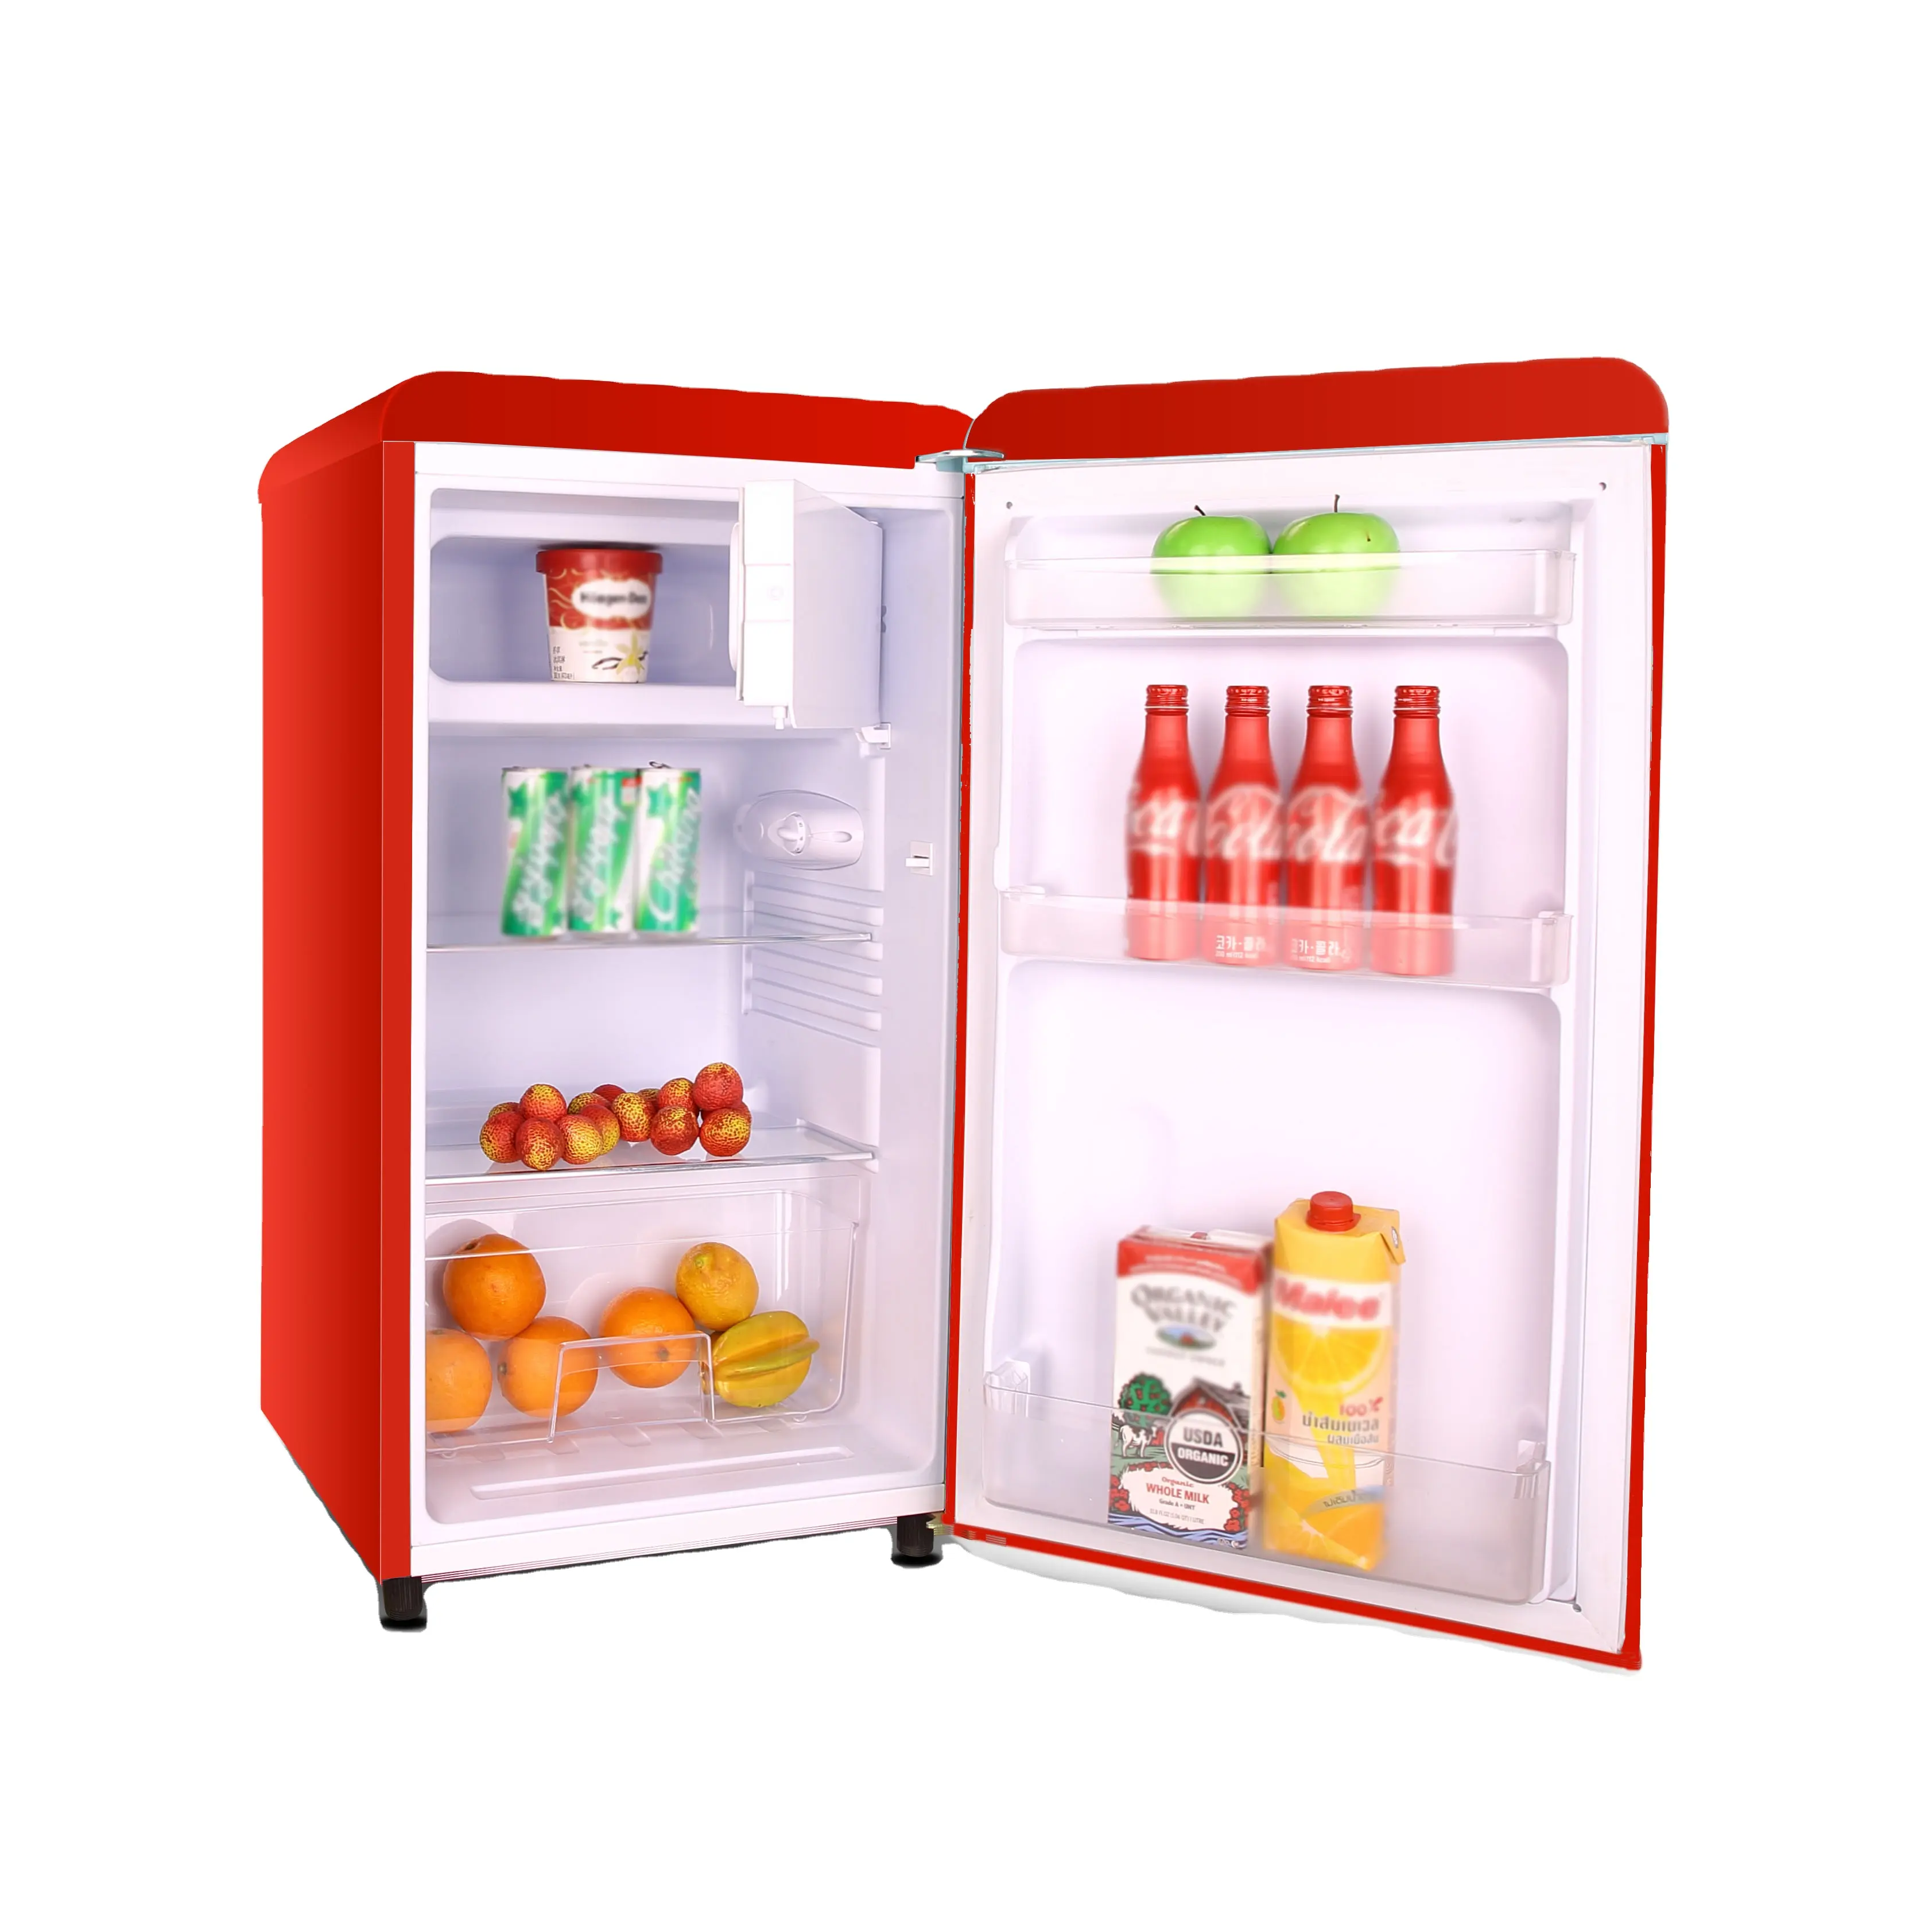 Retro style fridge 96L colorful mini fridge mini bar single door refrigerator household BC-96LH for home and hotel